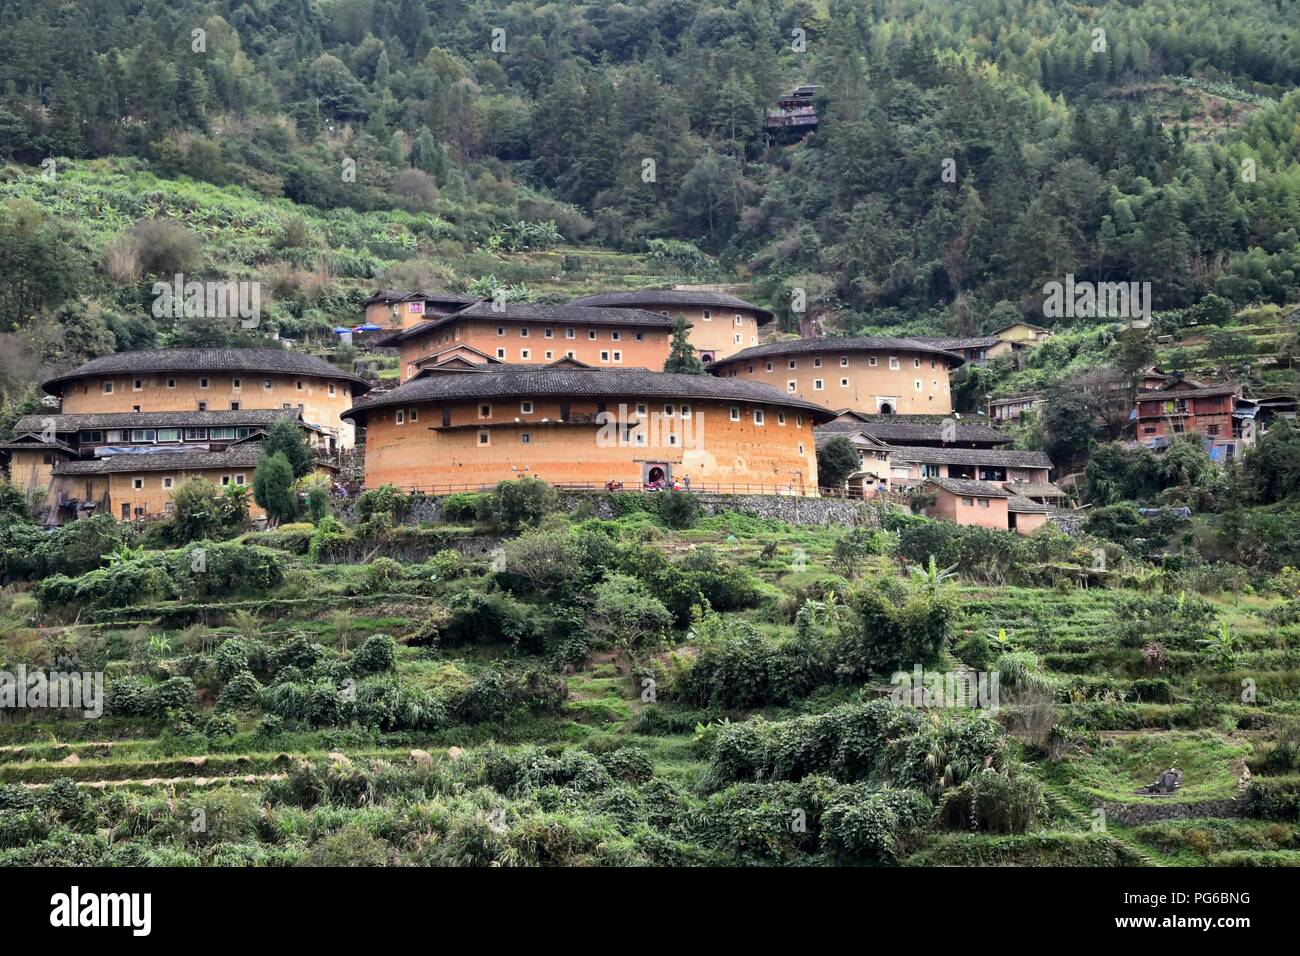 The Fujian Tulou, the Chinese rural earthen dwelling unique to the Hakka minority in Fujian province in China. Stock Photo